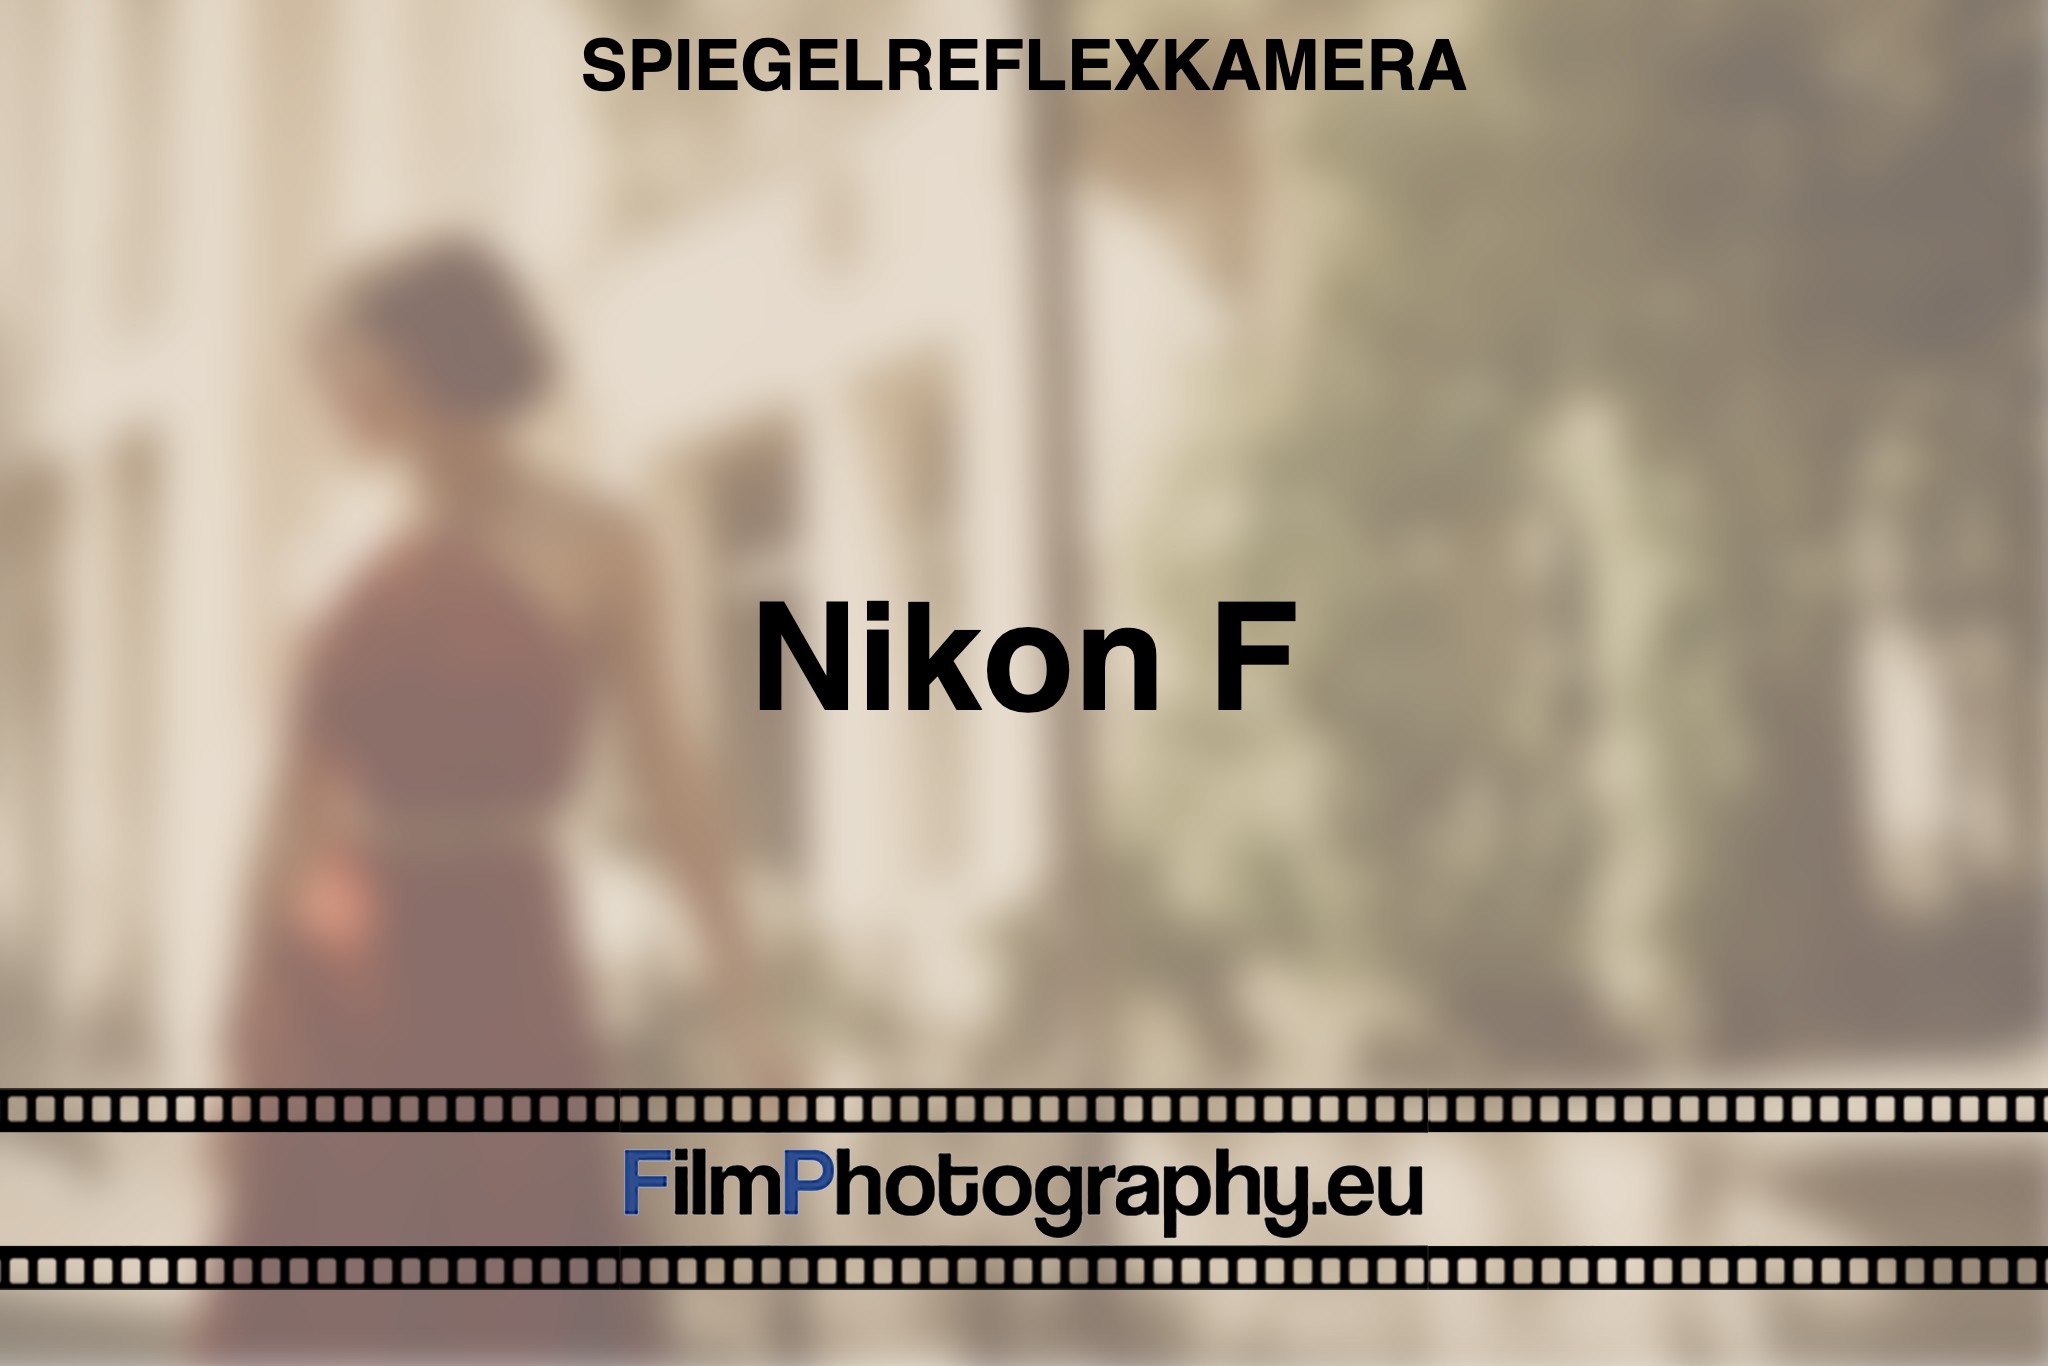 nikon-f-spiegelreflexkamera-bnv